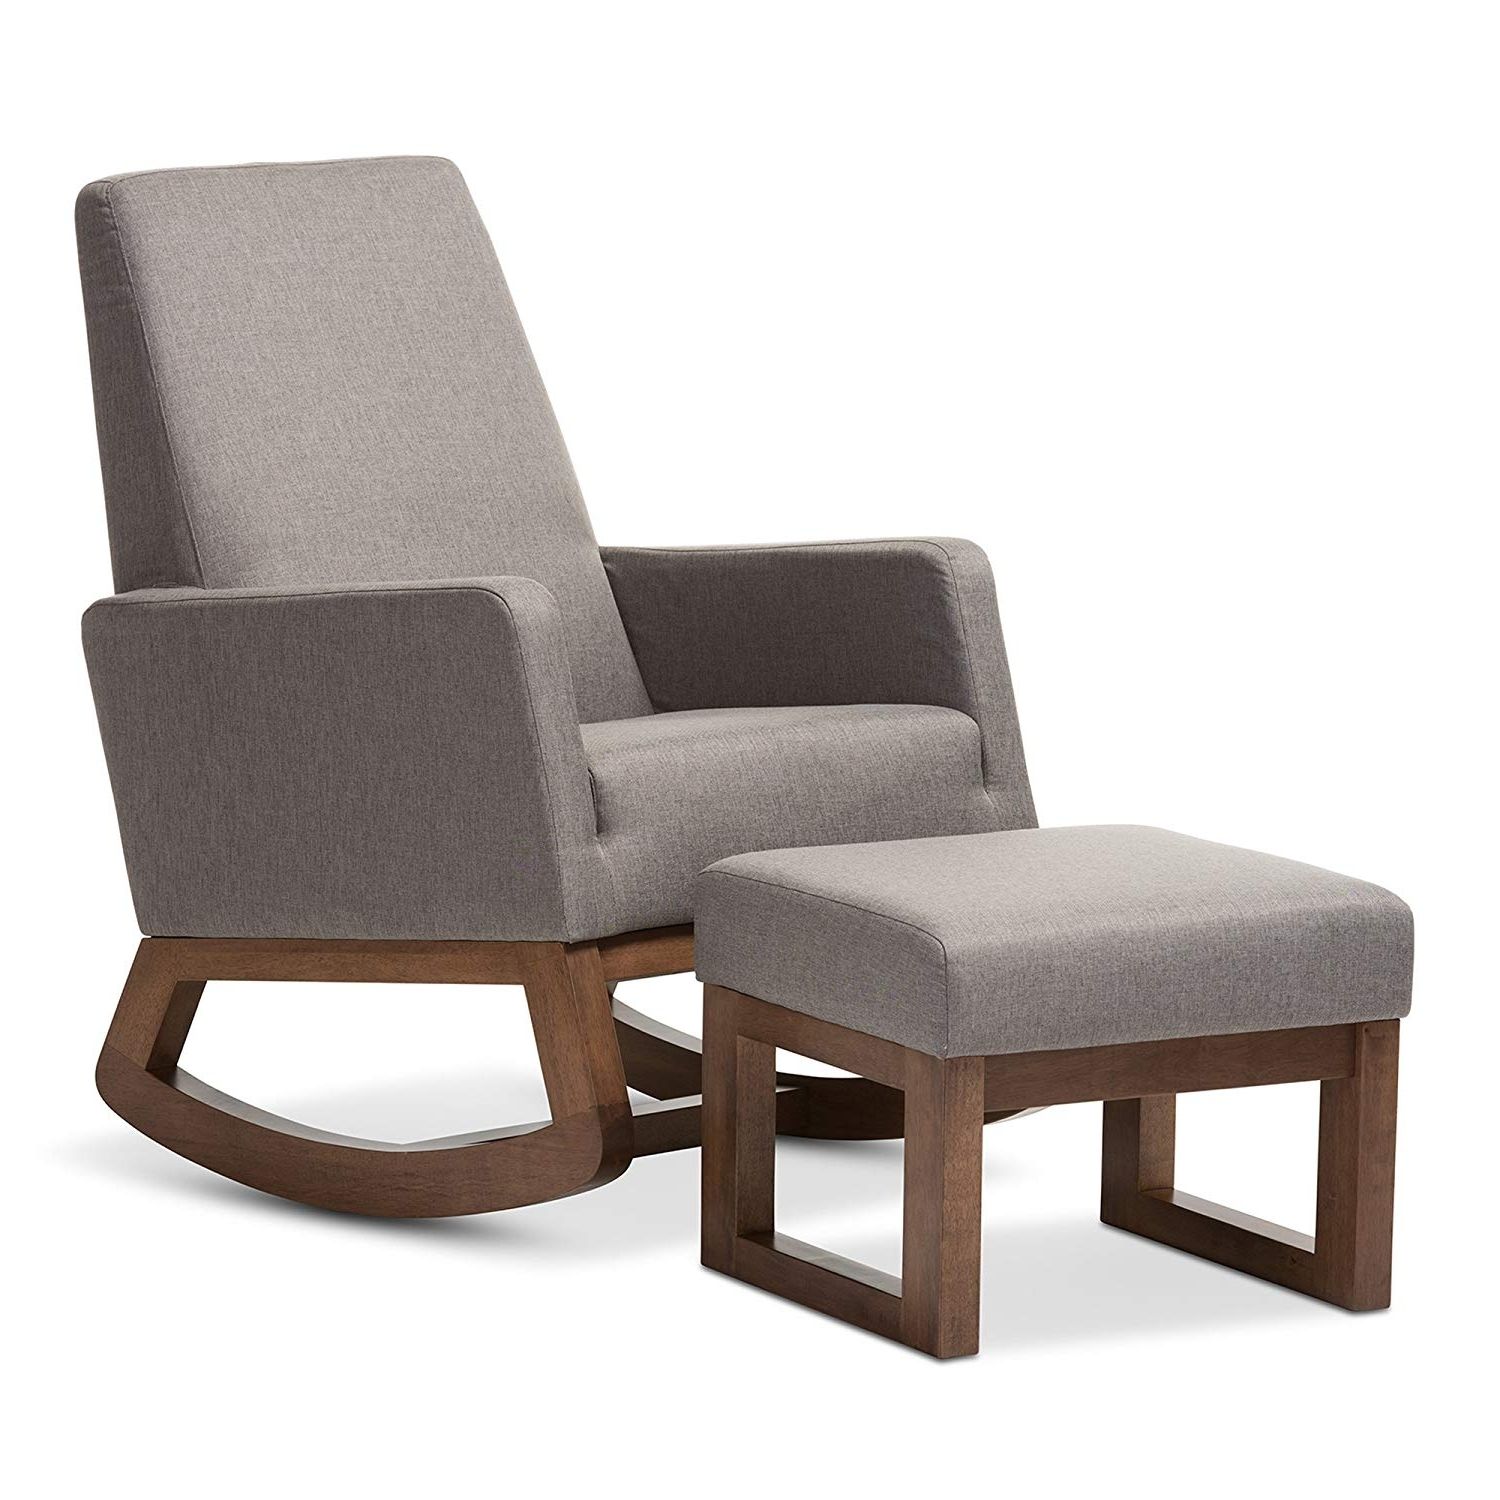 Amazon: Baxton Studio Yashiya Mid Century Retro Modern Fabric With Widely Used Retro Rocking Chairs (View 2 of 15)